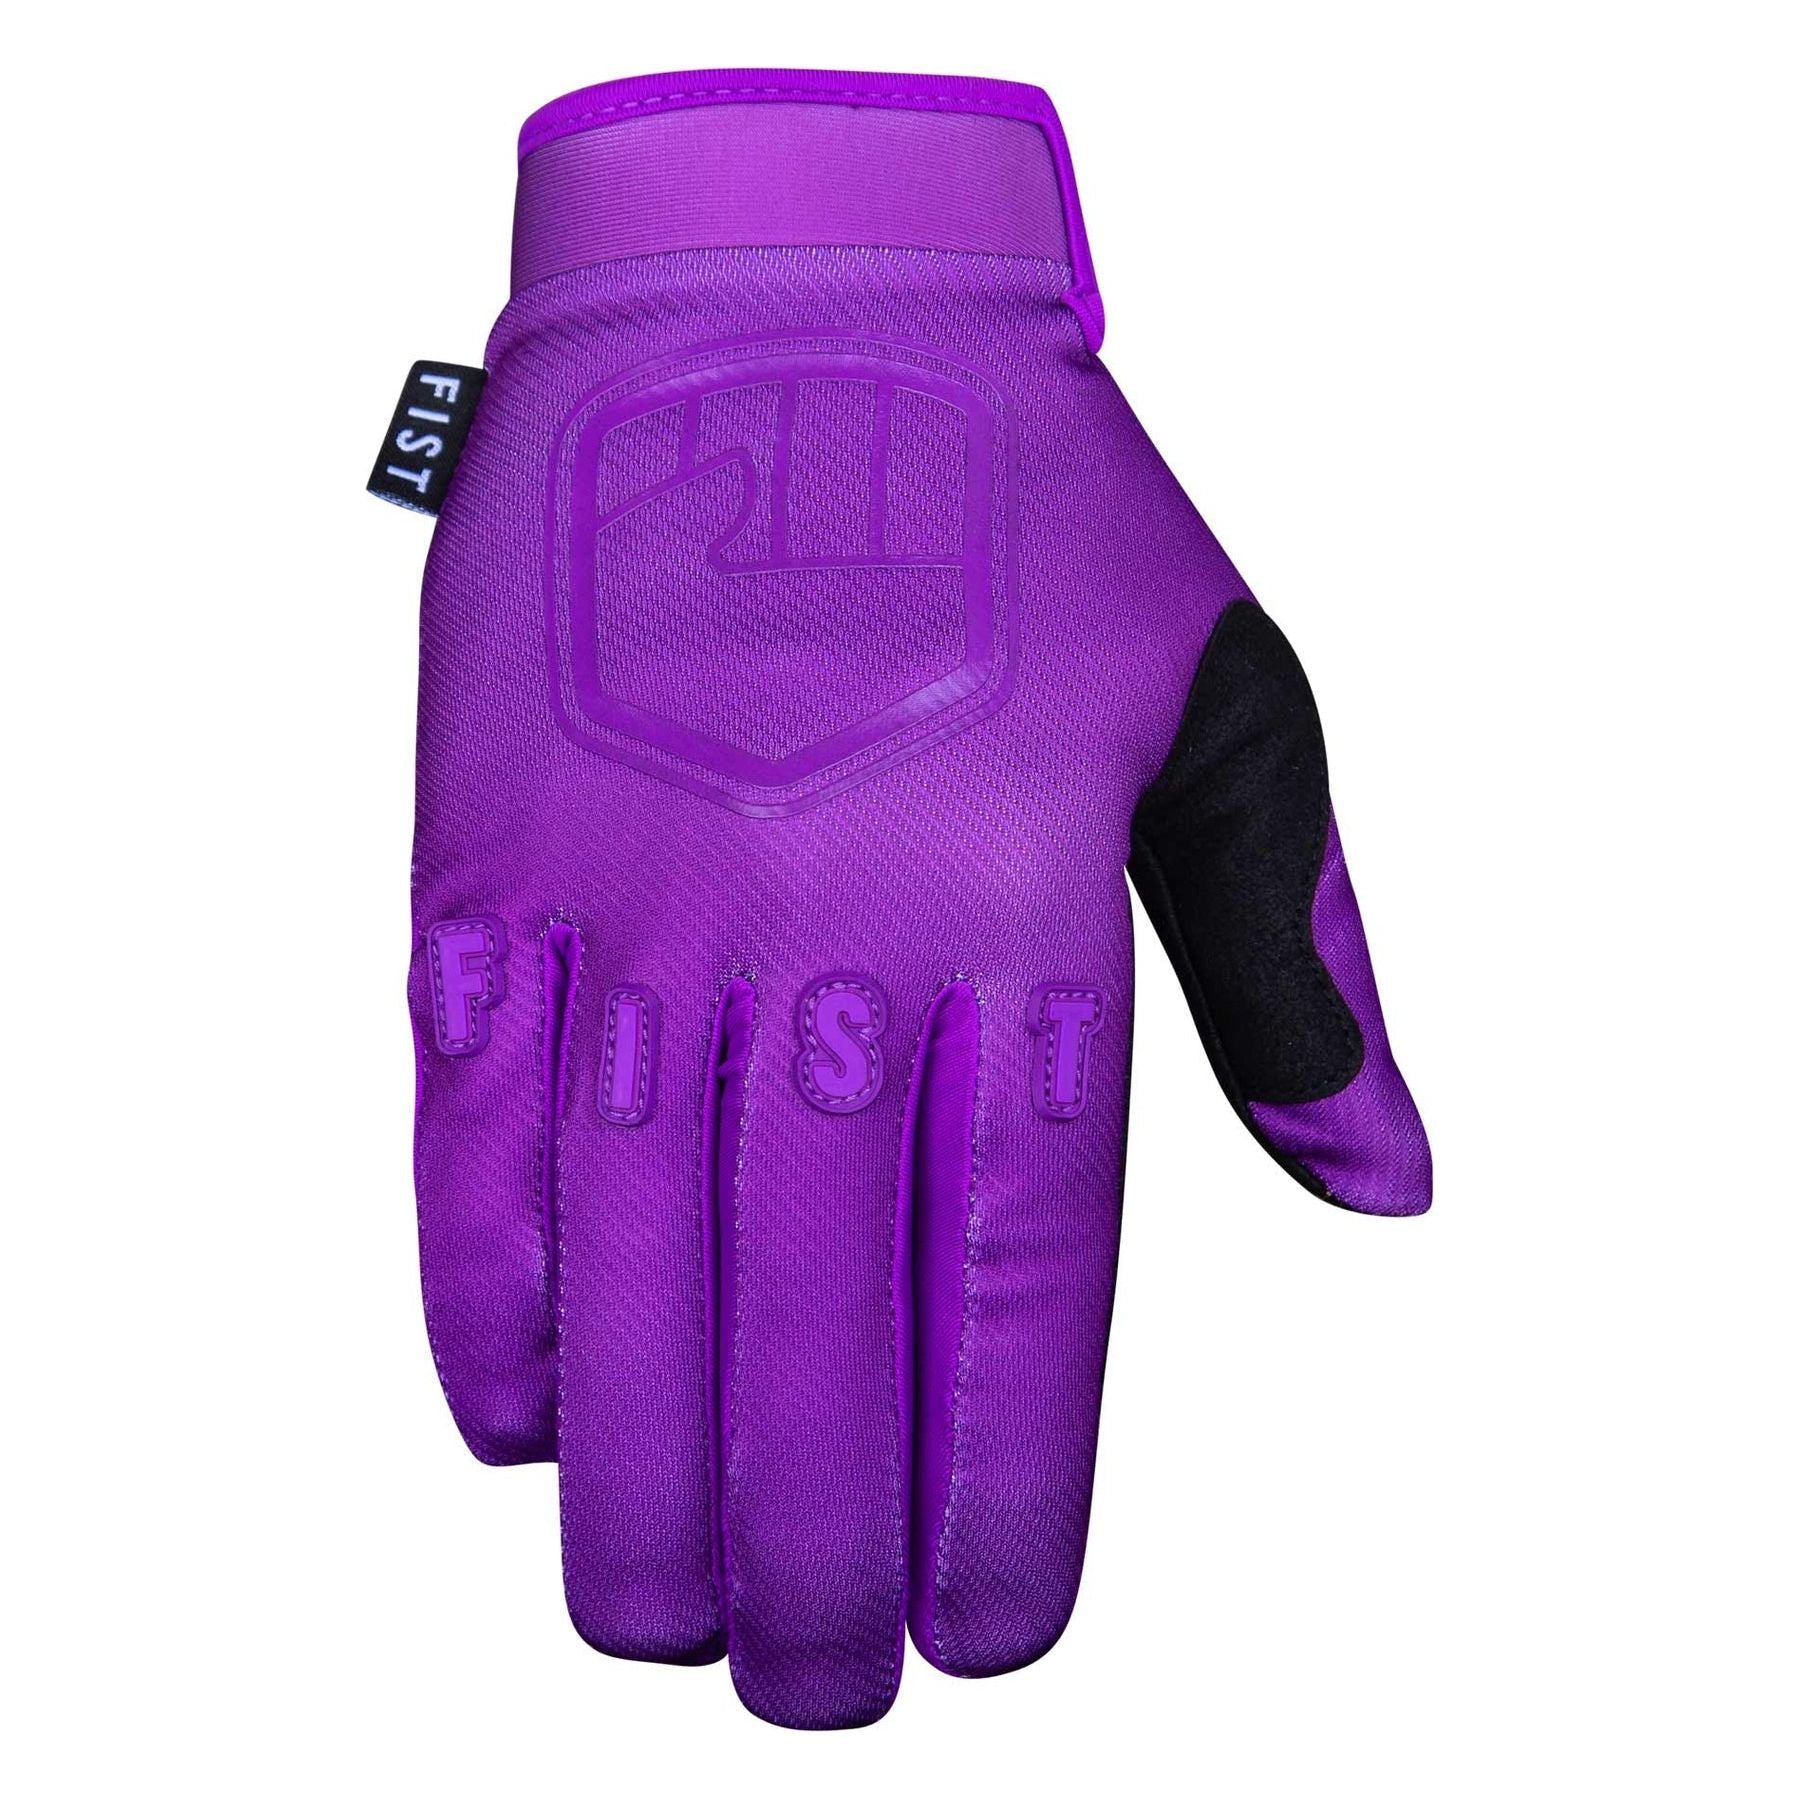 Fist Handwear Stocker Youth Strapped Glove - Youth L - Purple Stocker - Image 1